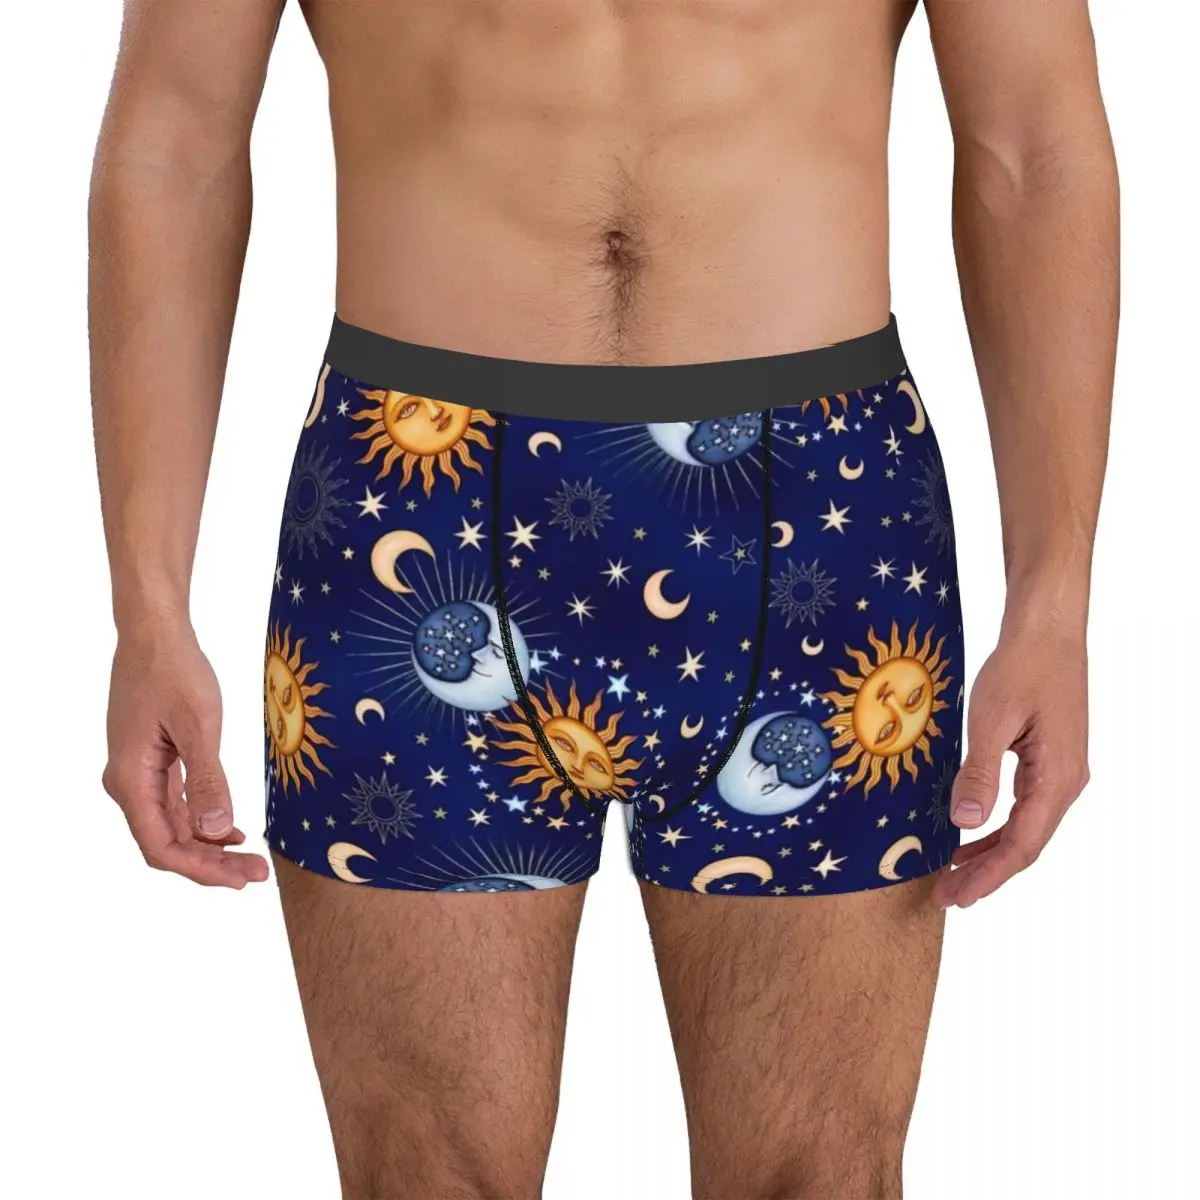 Universe Crescent Moon And Sun Men's Boxer Briefs Shorts Men Underpants Cartoon Anime Funny Men's Panties Soft Underwear For Men